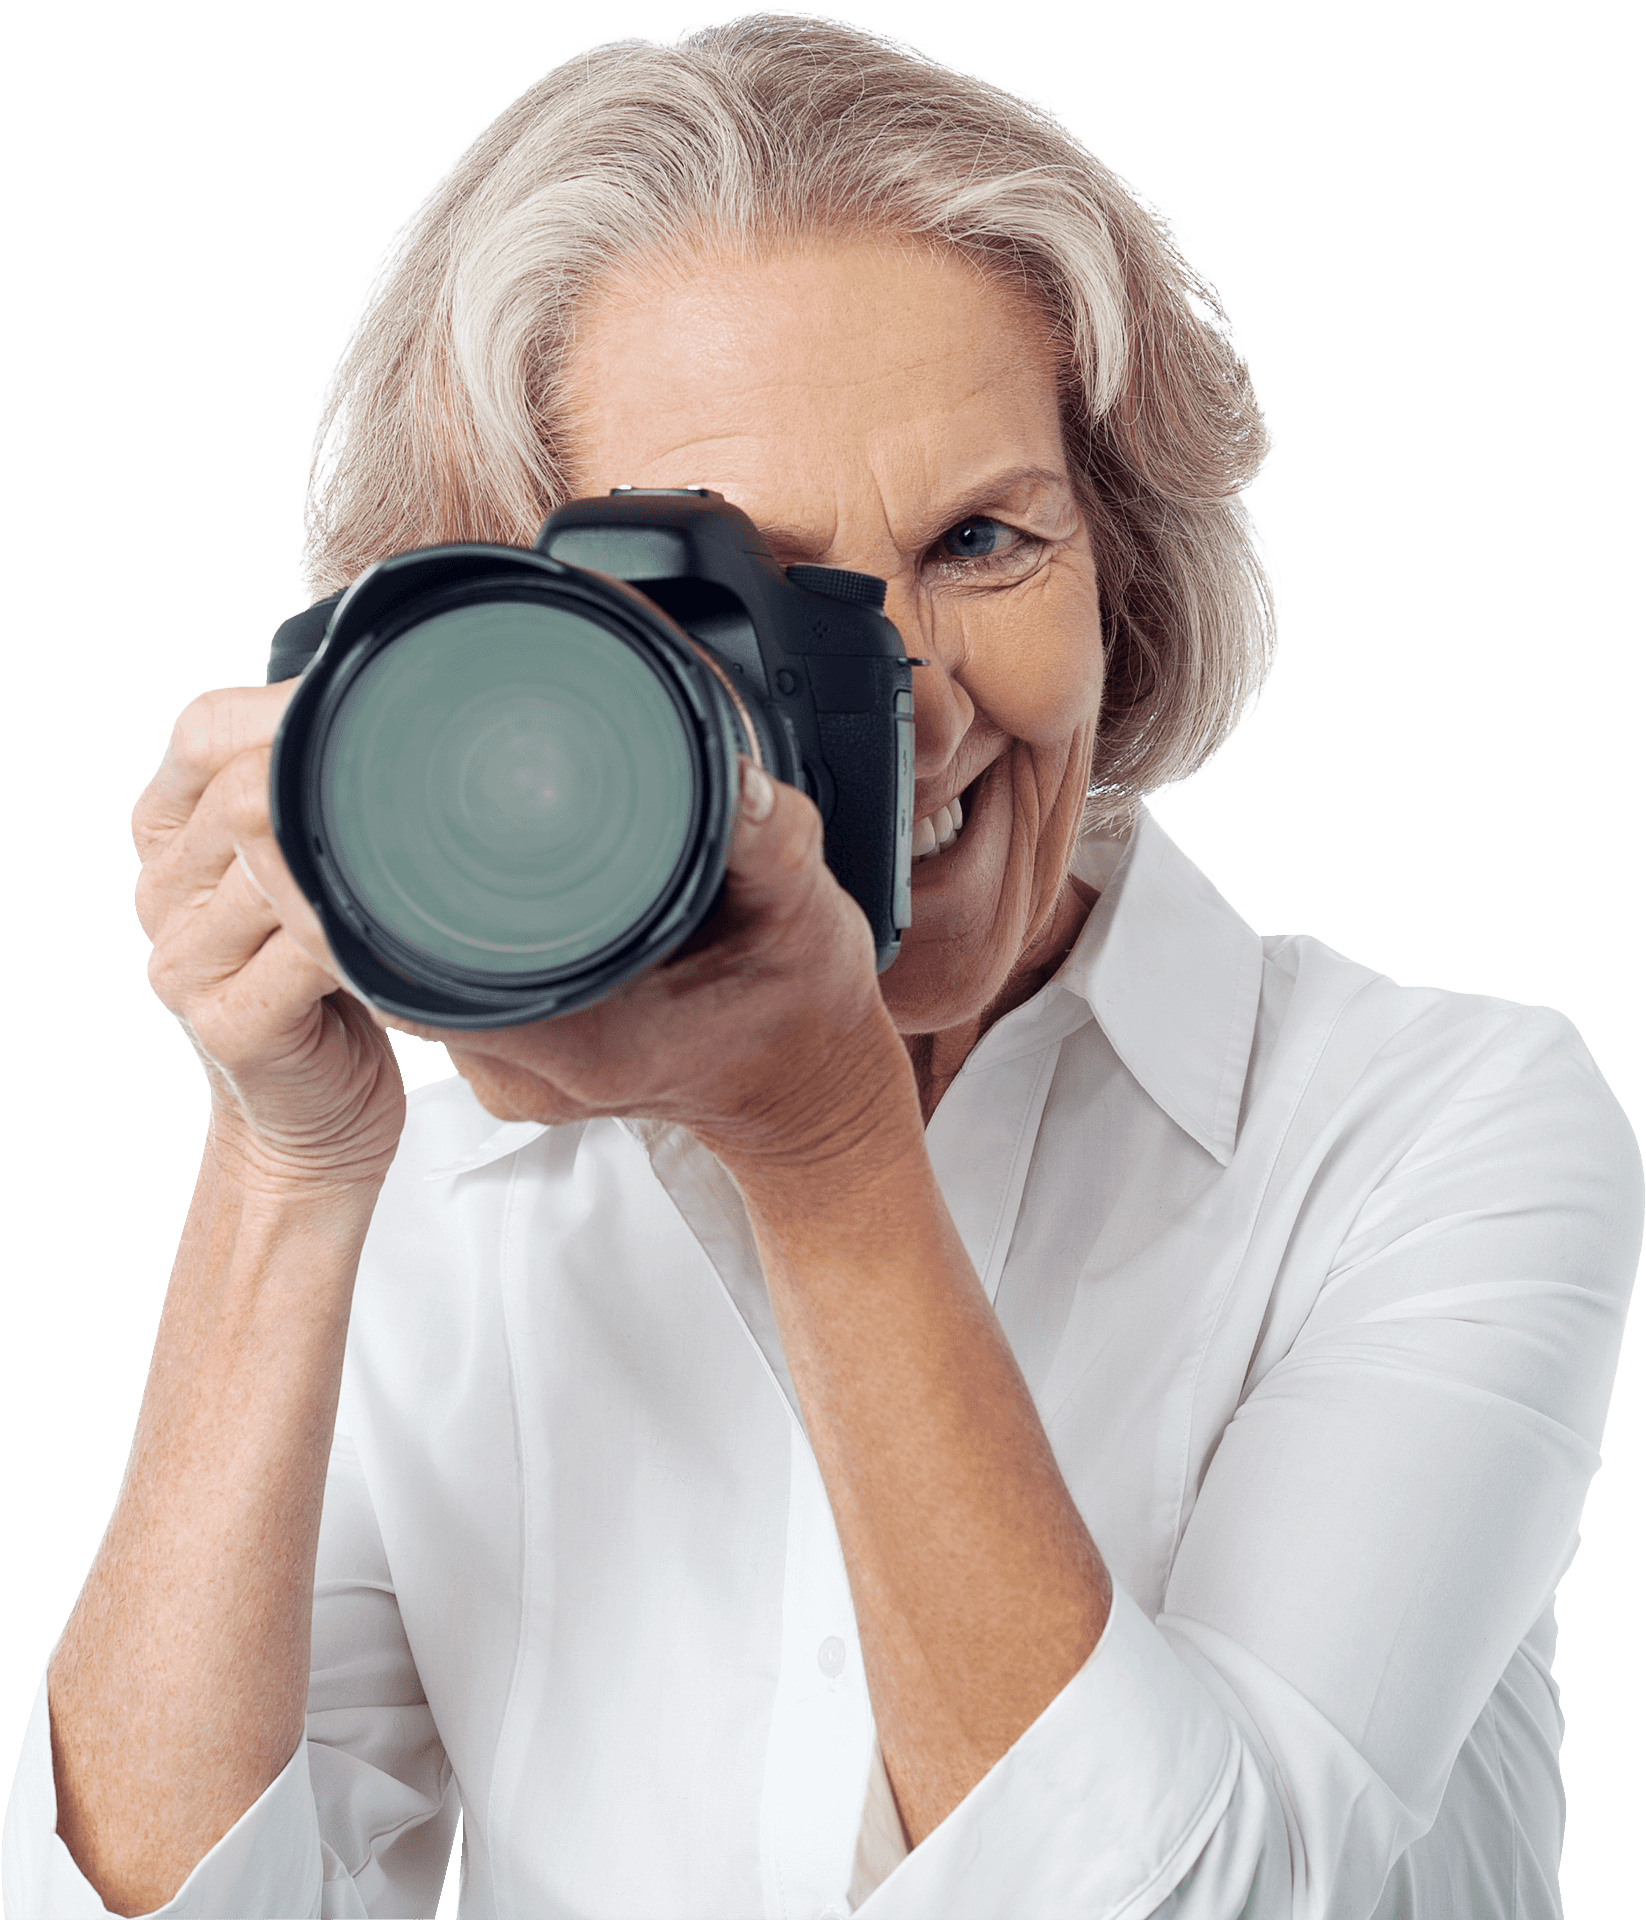 Senior Woman Photographer PNG image